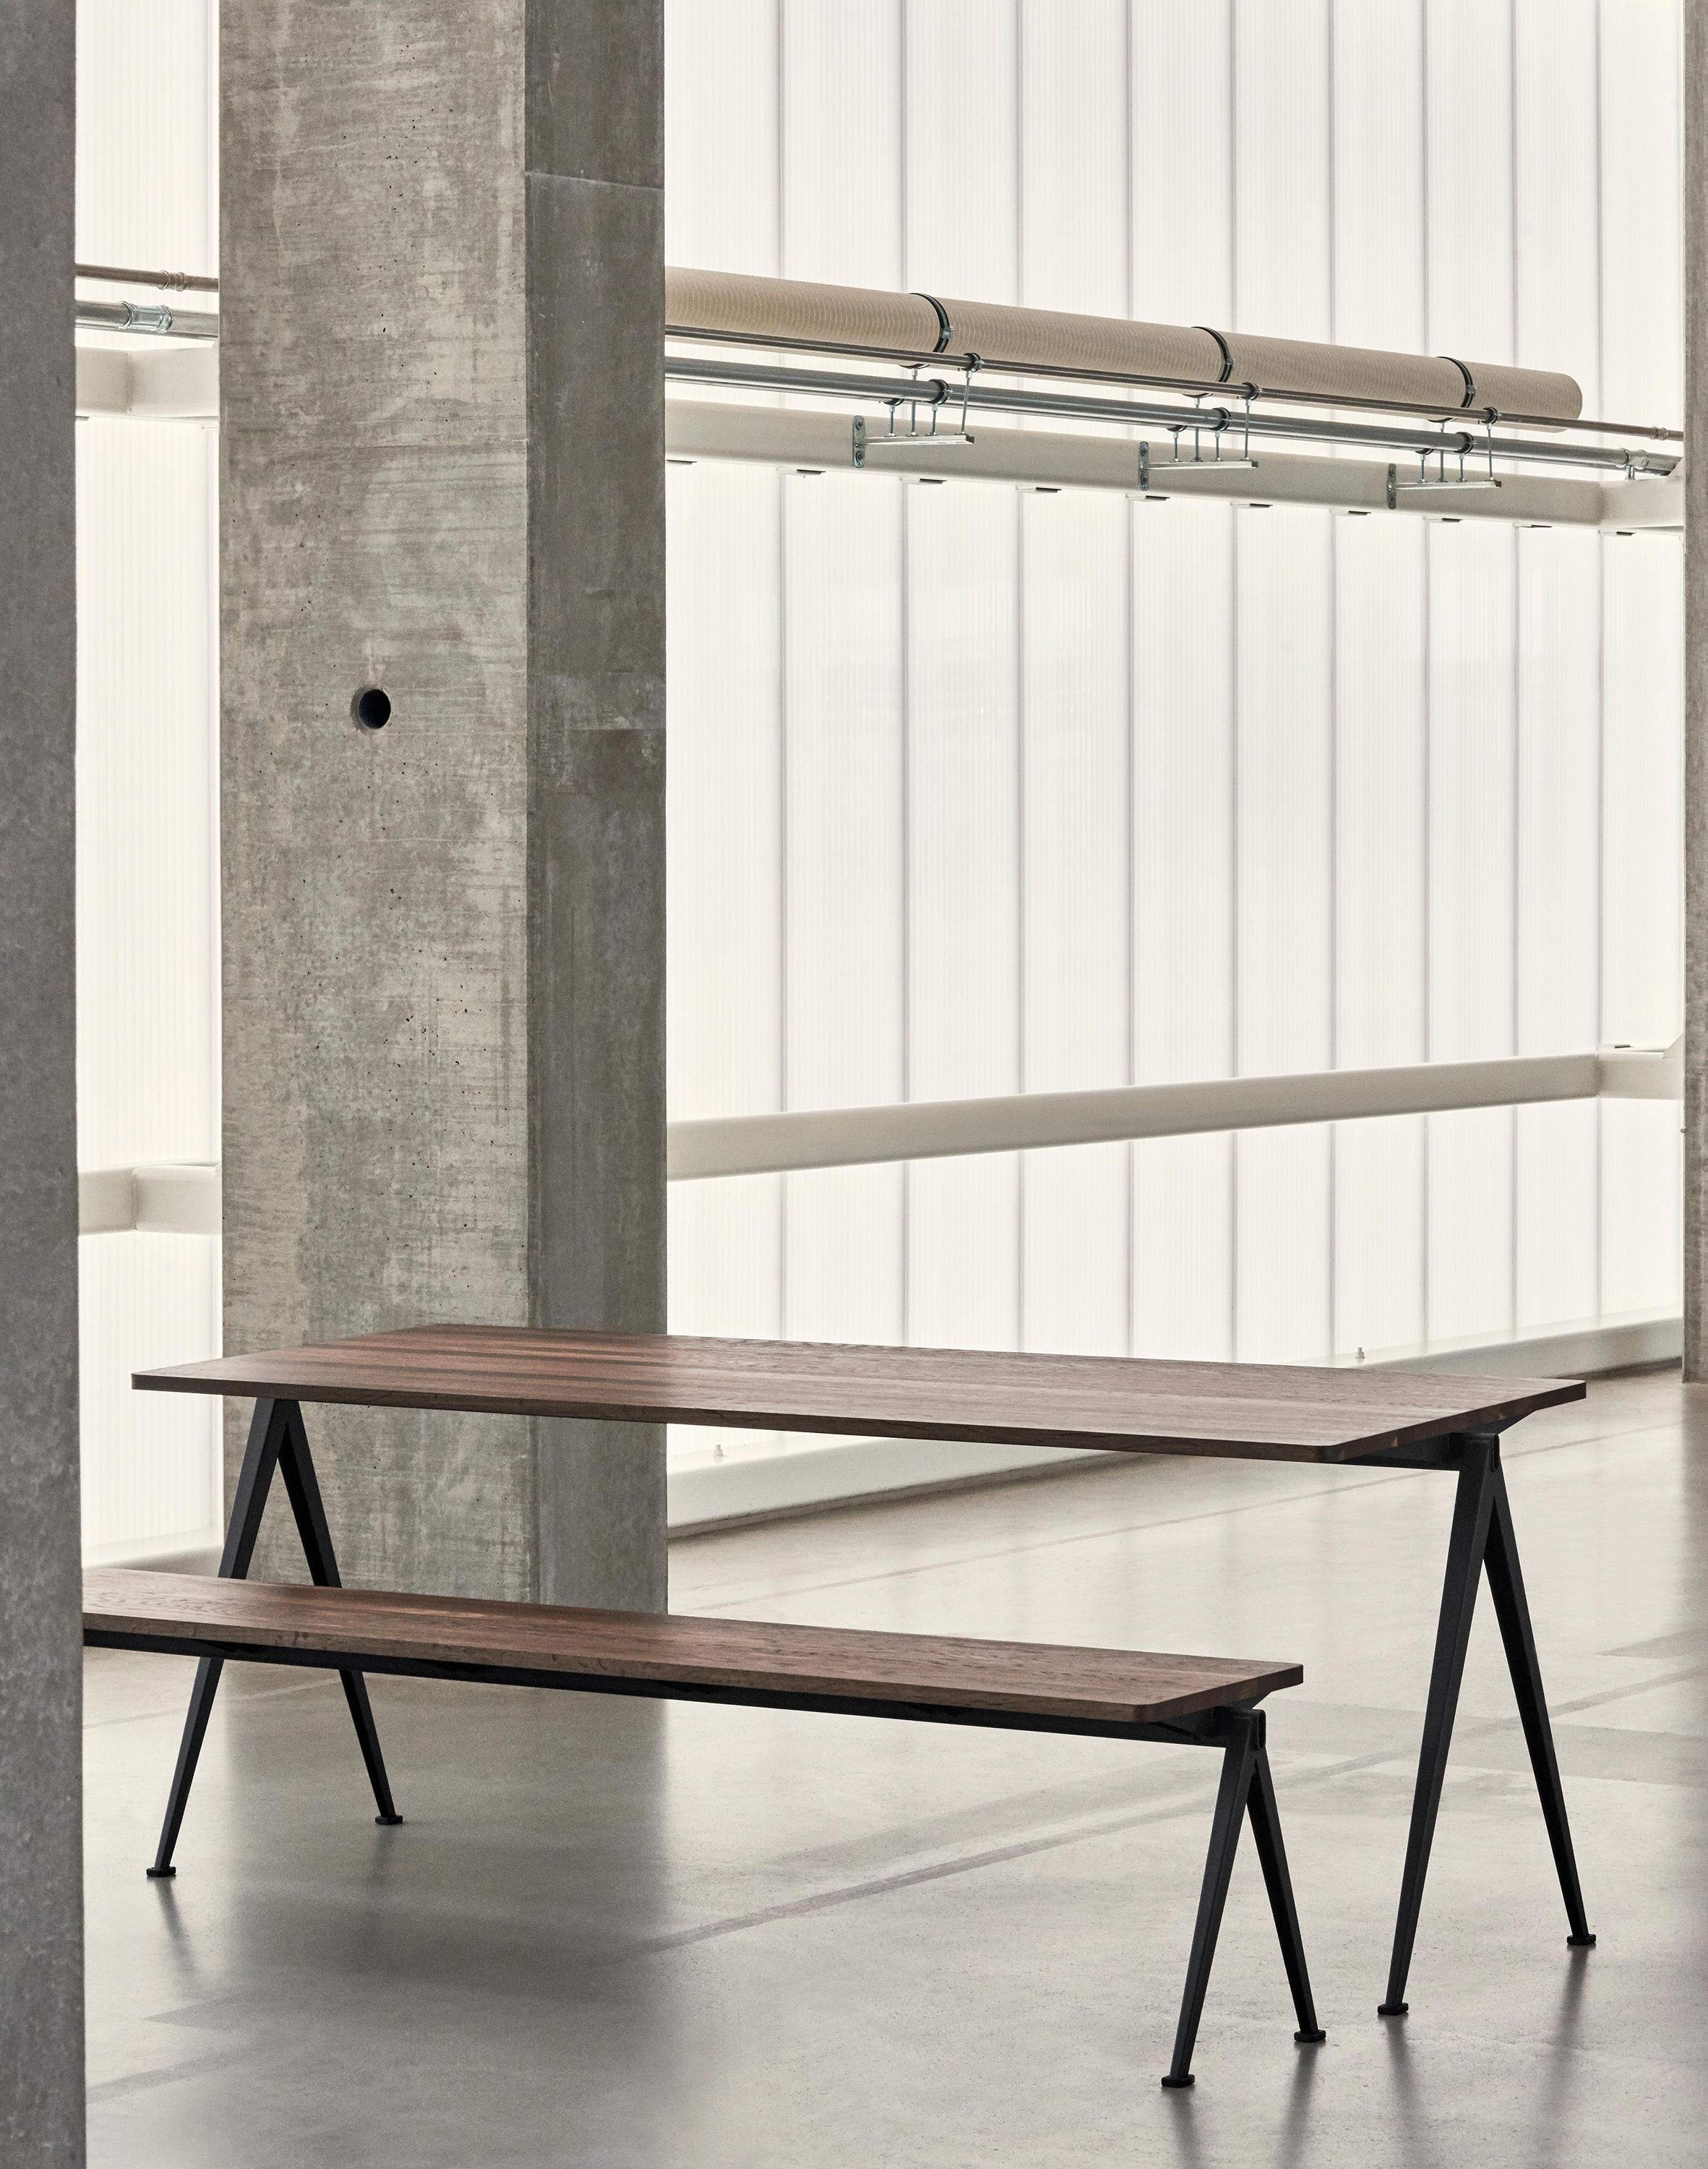 Pyramid Bench 11 & designer furniture | Architonic